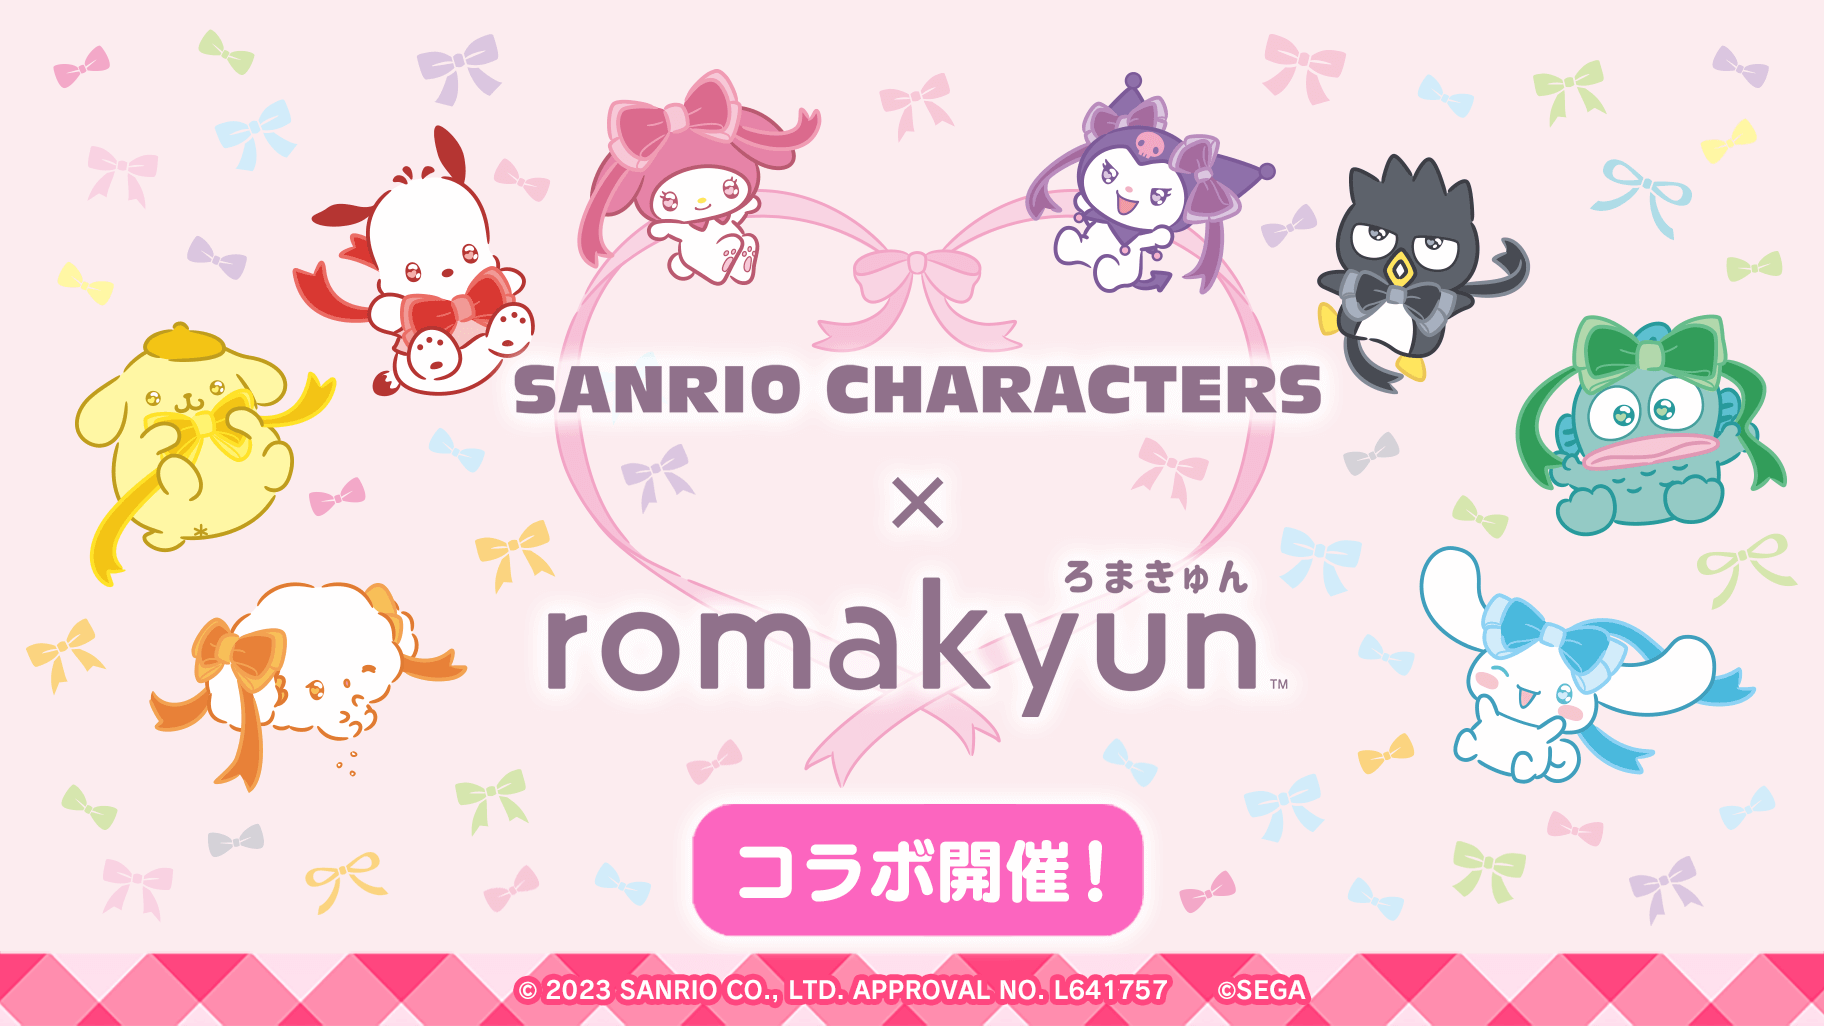 Sanrio characters×romakyun マスコット